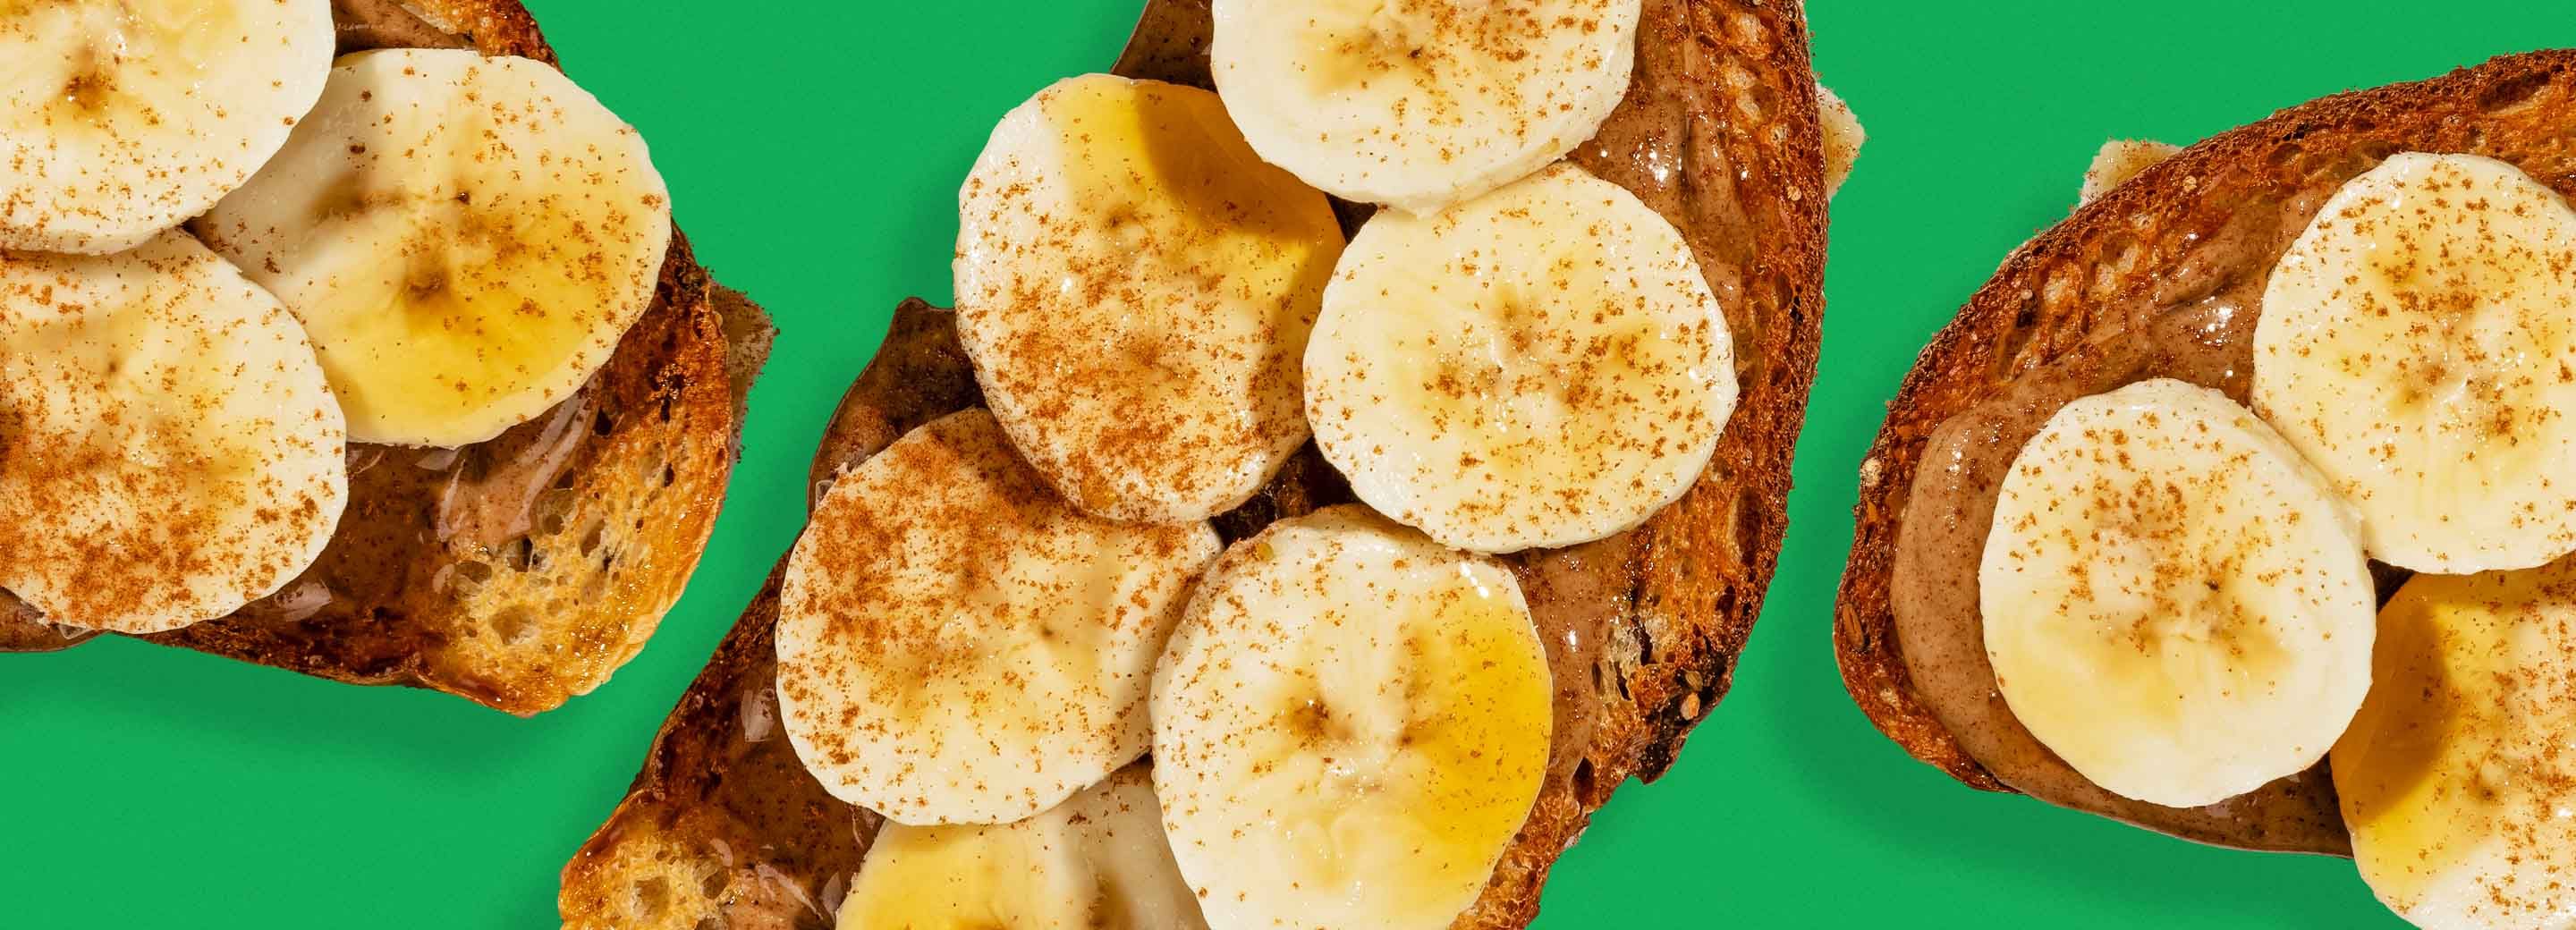 Almond Butter & Banana Toast